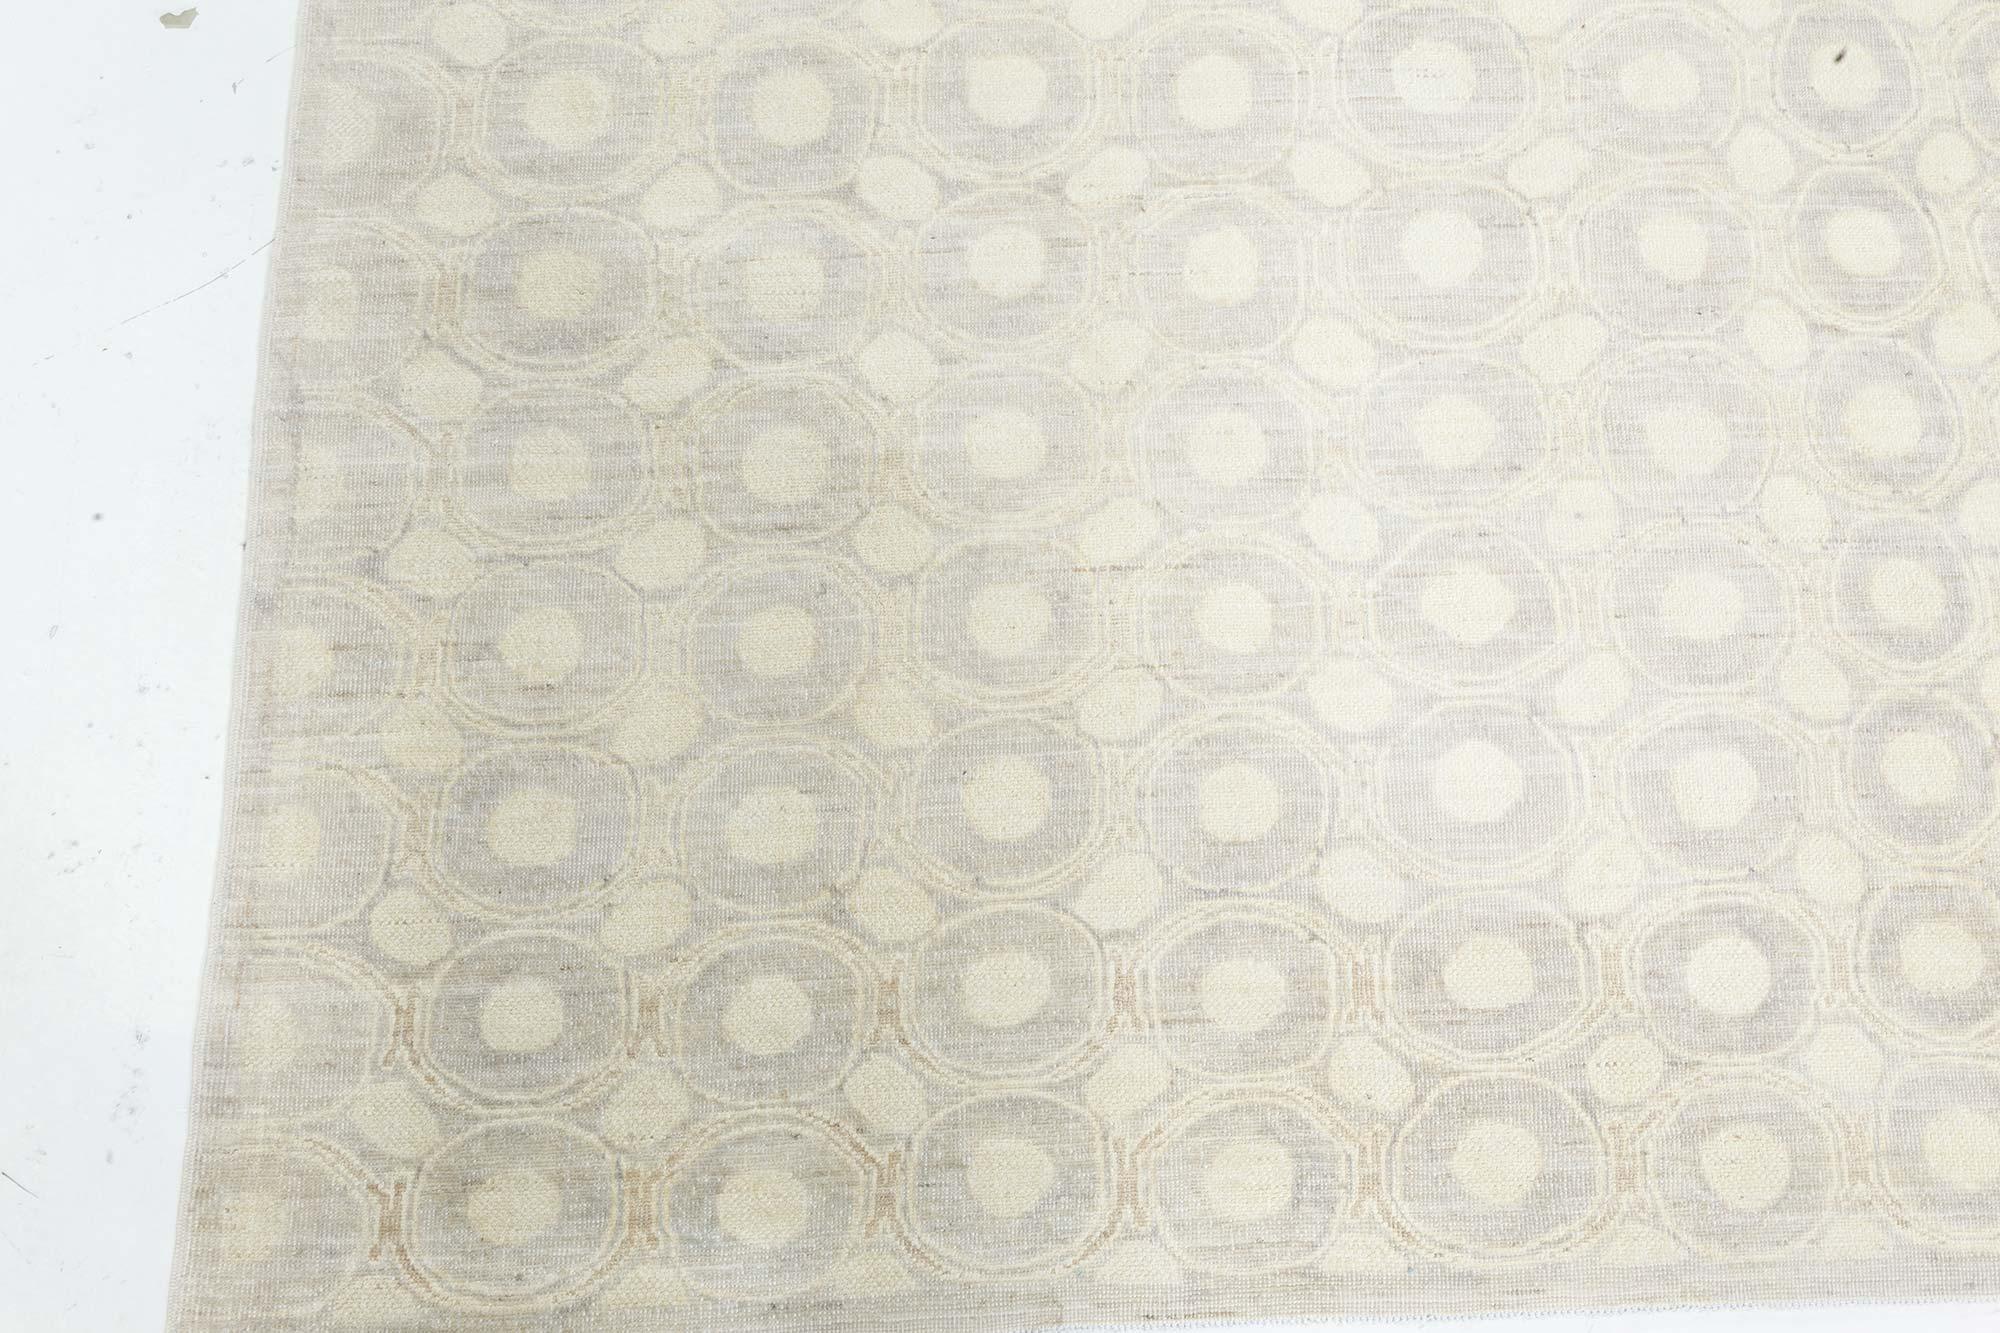 Indian Contemporary Circular Design Handmade Silk Rug by Doris Leslie Blau For Sale